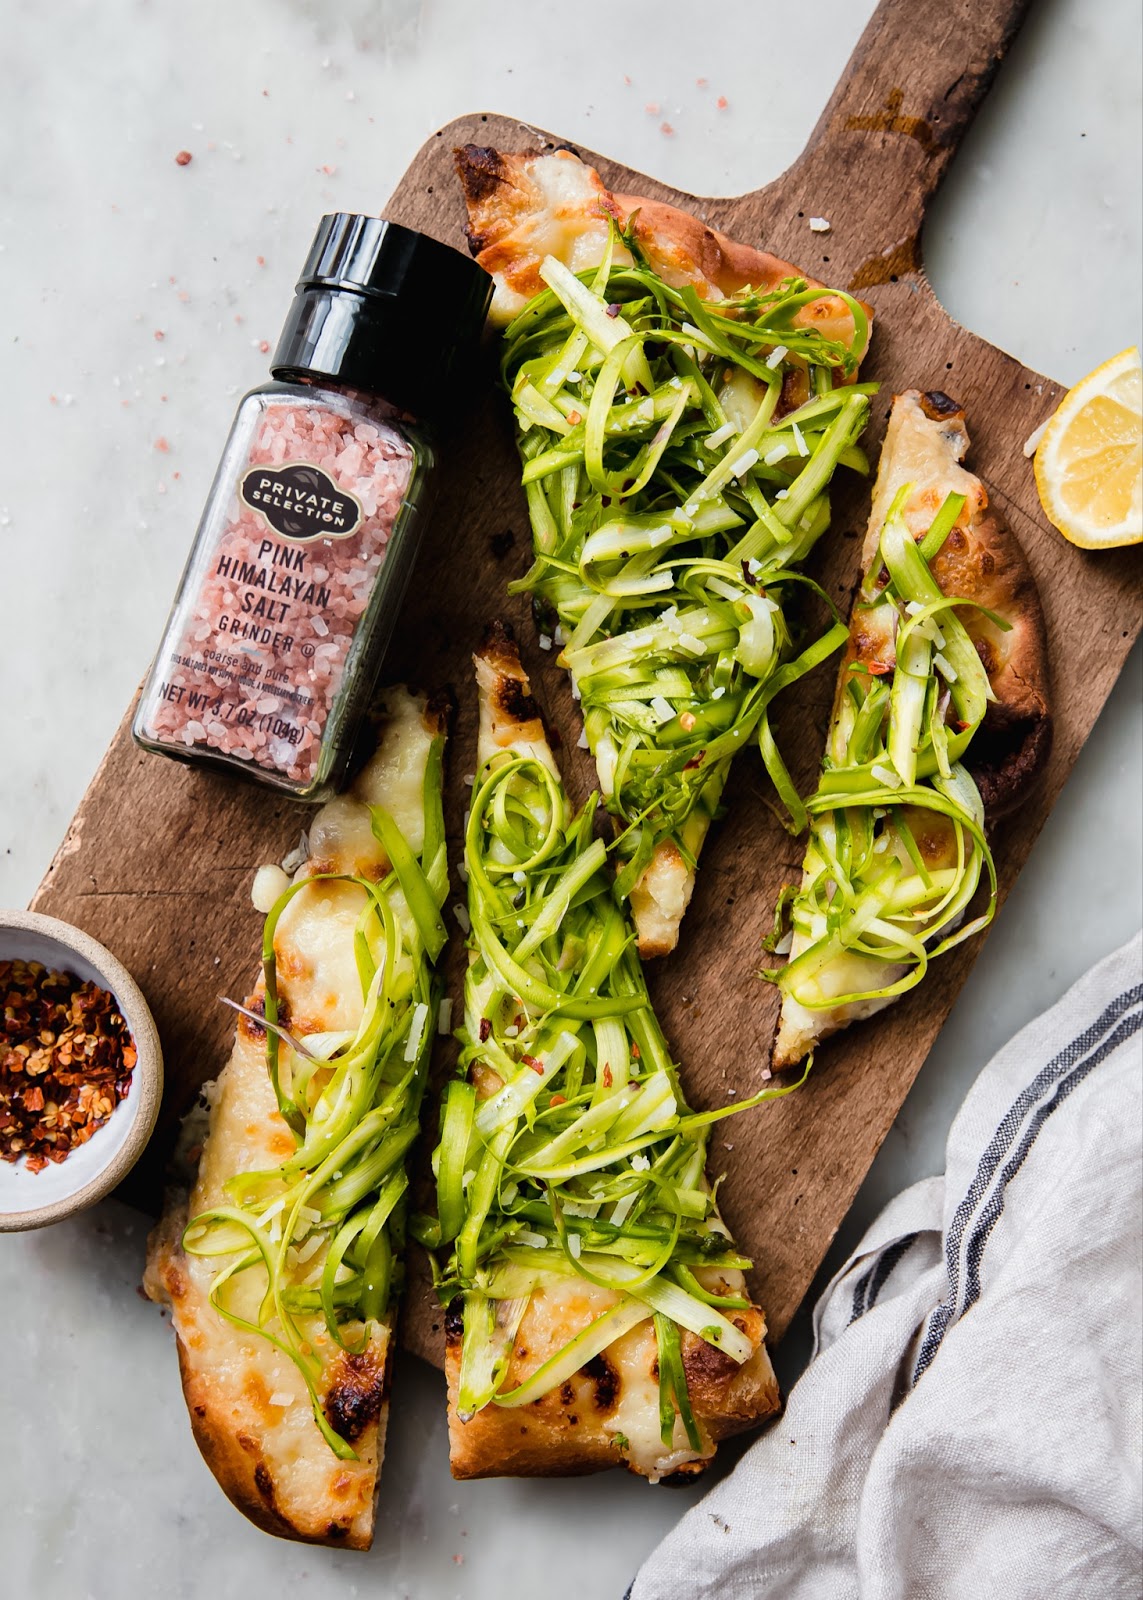 Himalayan sea salt product placement with asparagus pizza